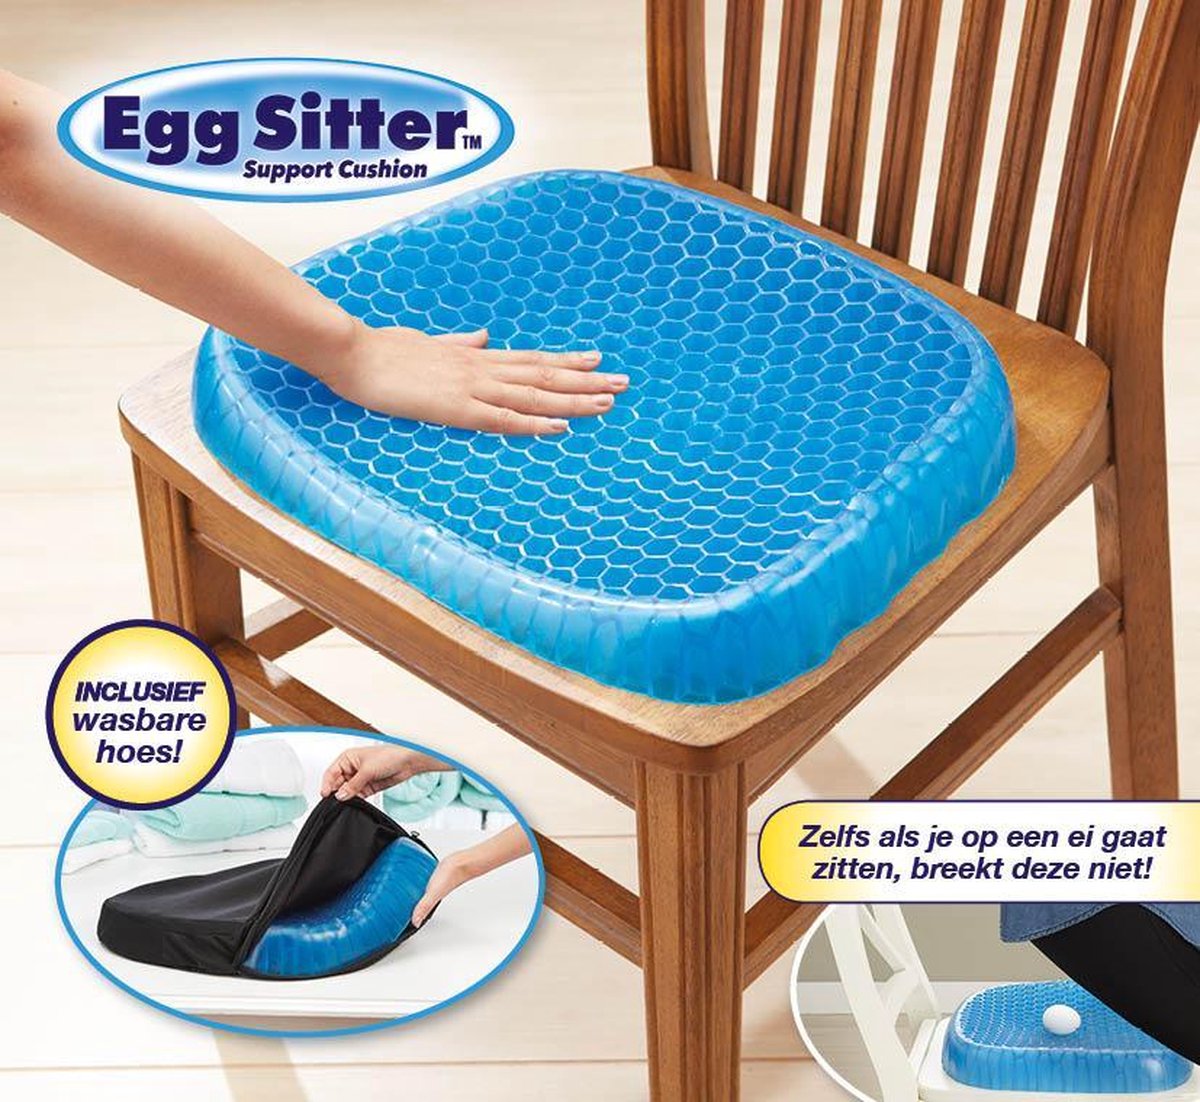 Egg Sitter Support Cushion, BulbHead